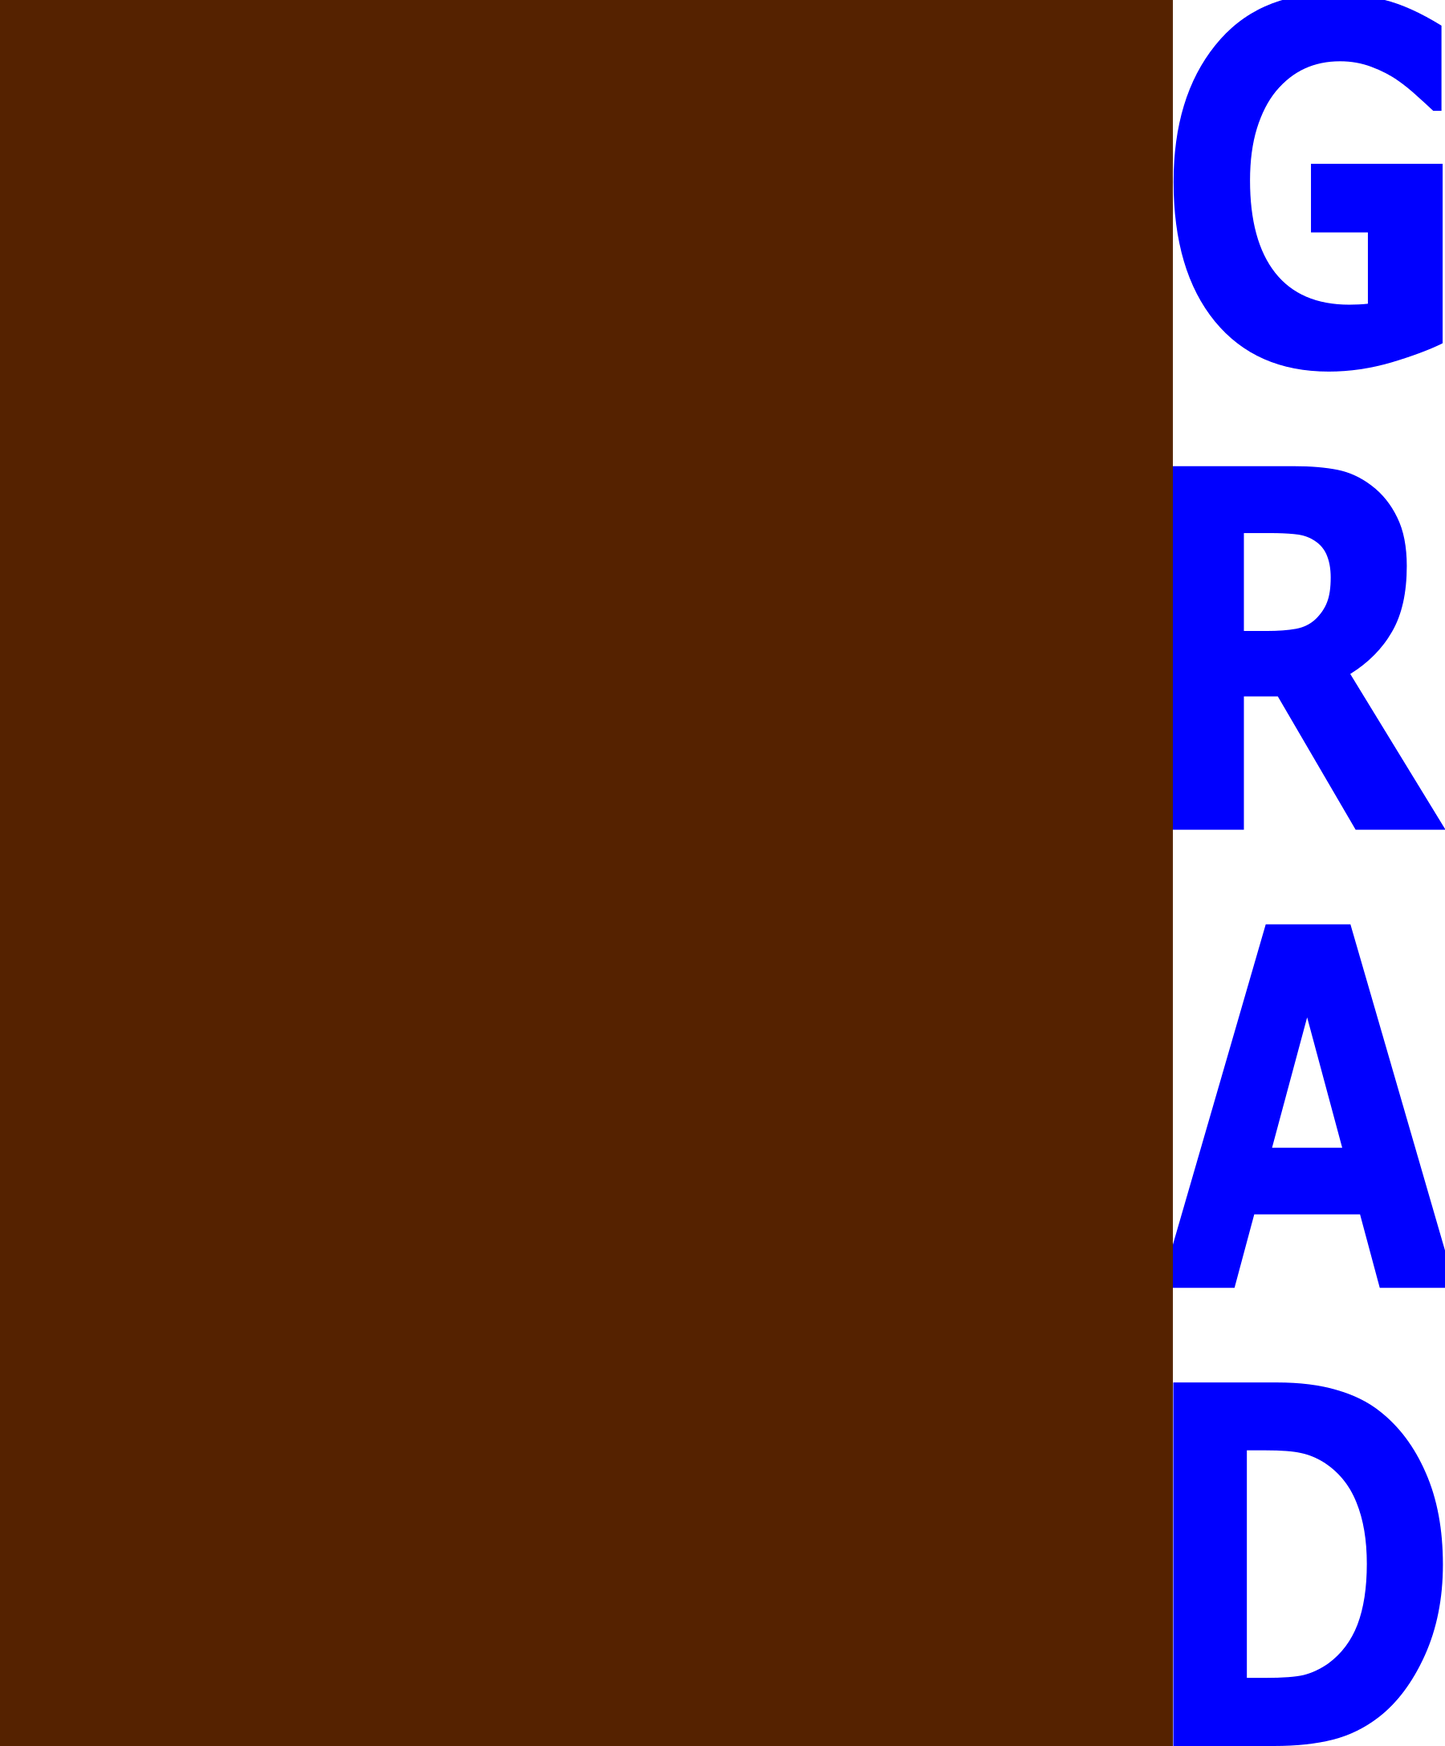 Grad frame templates